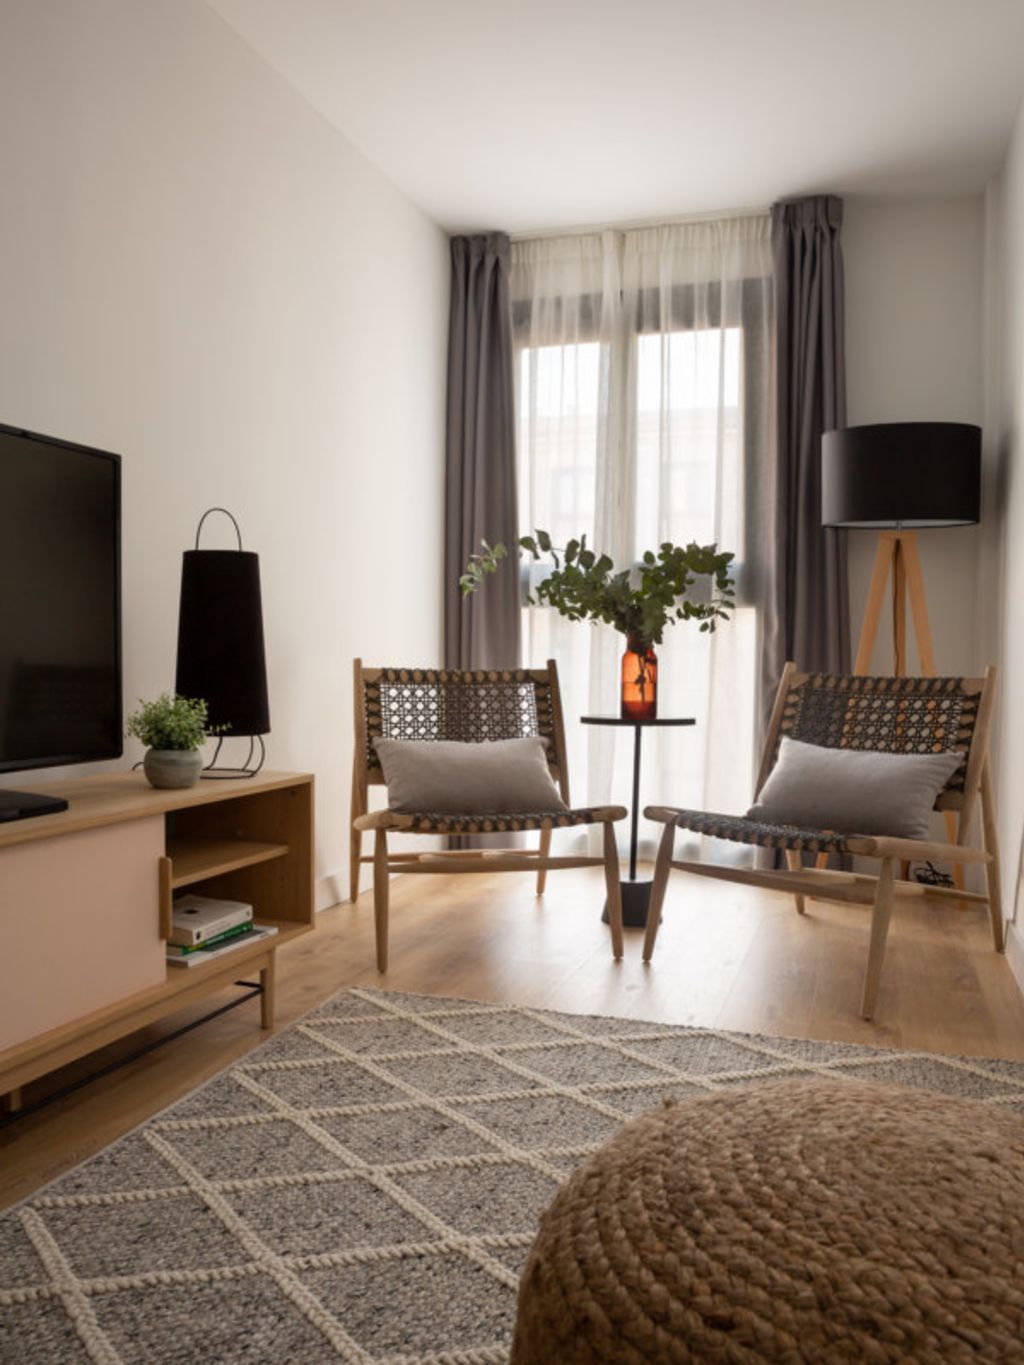 Incredible fully furnished flat - UBK-402716 - Incredible fully furnished flat